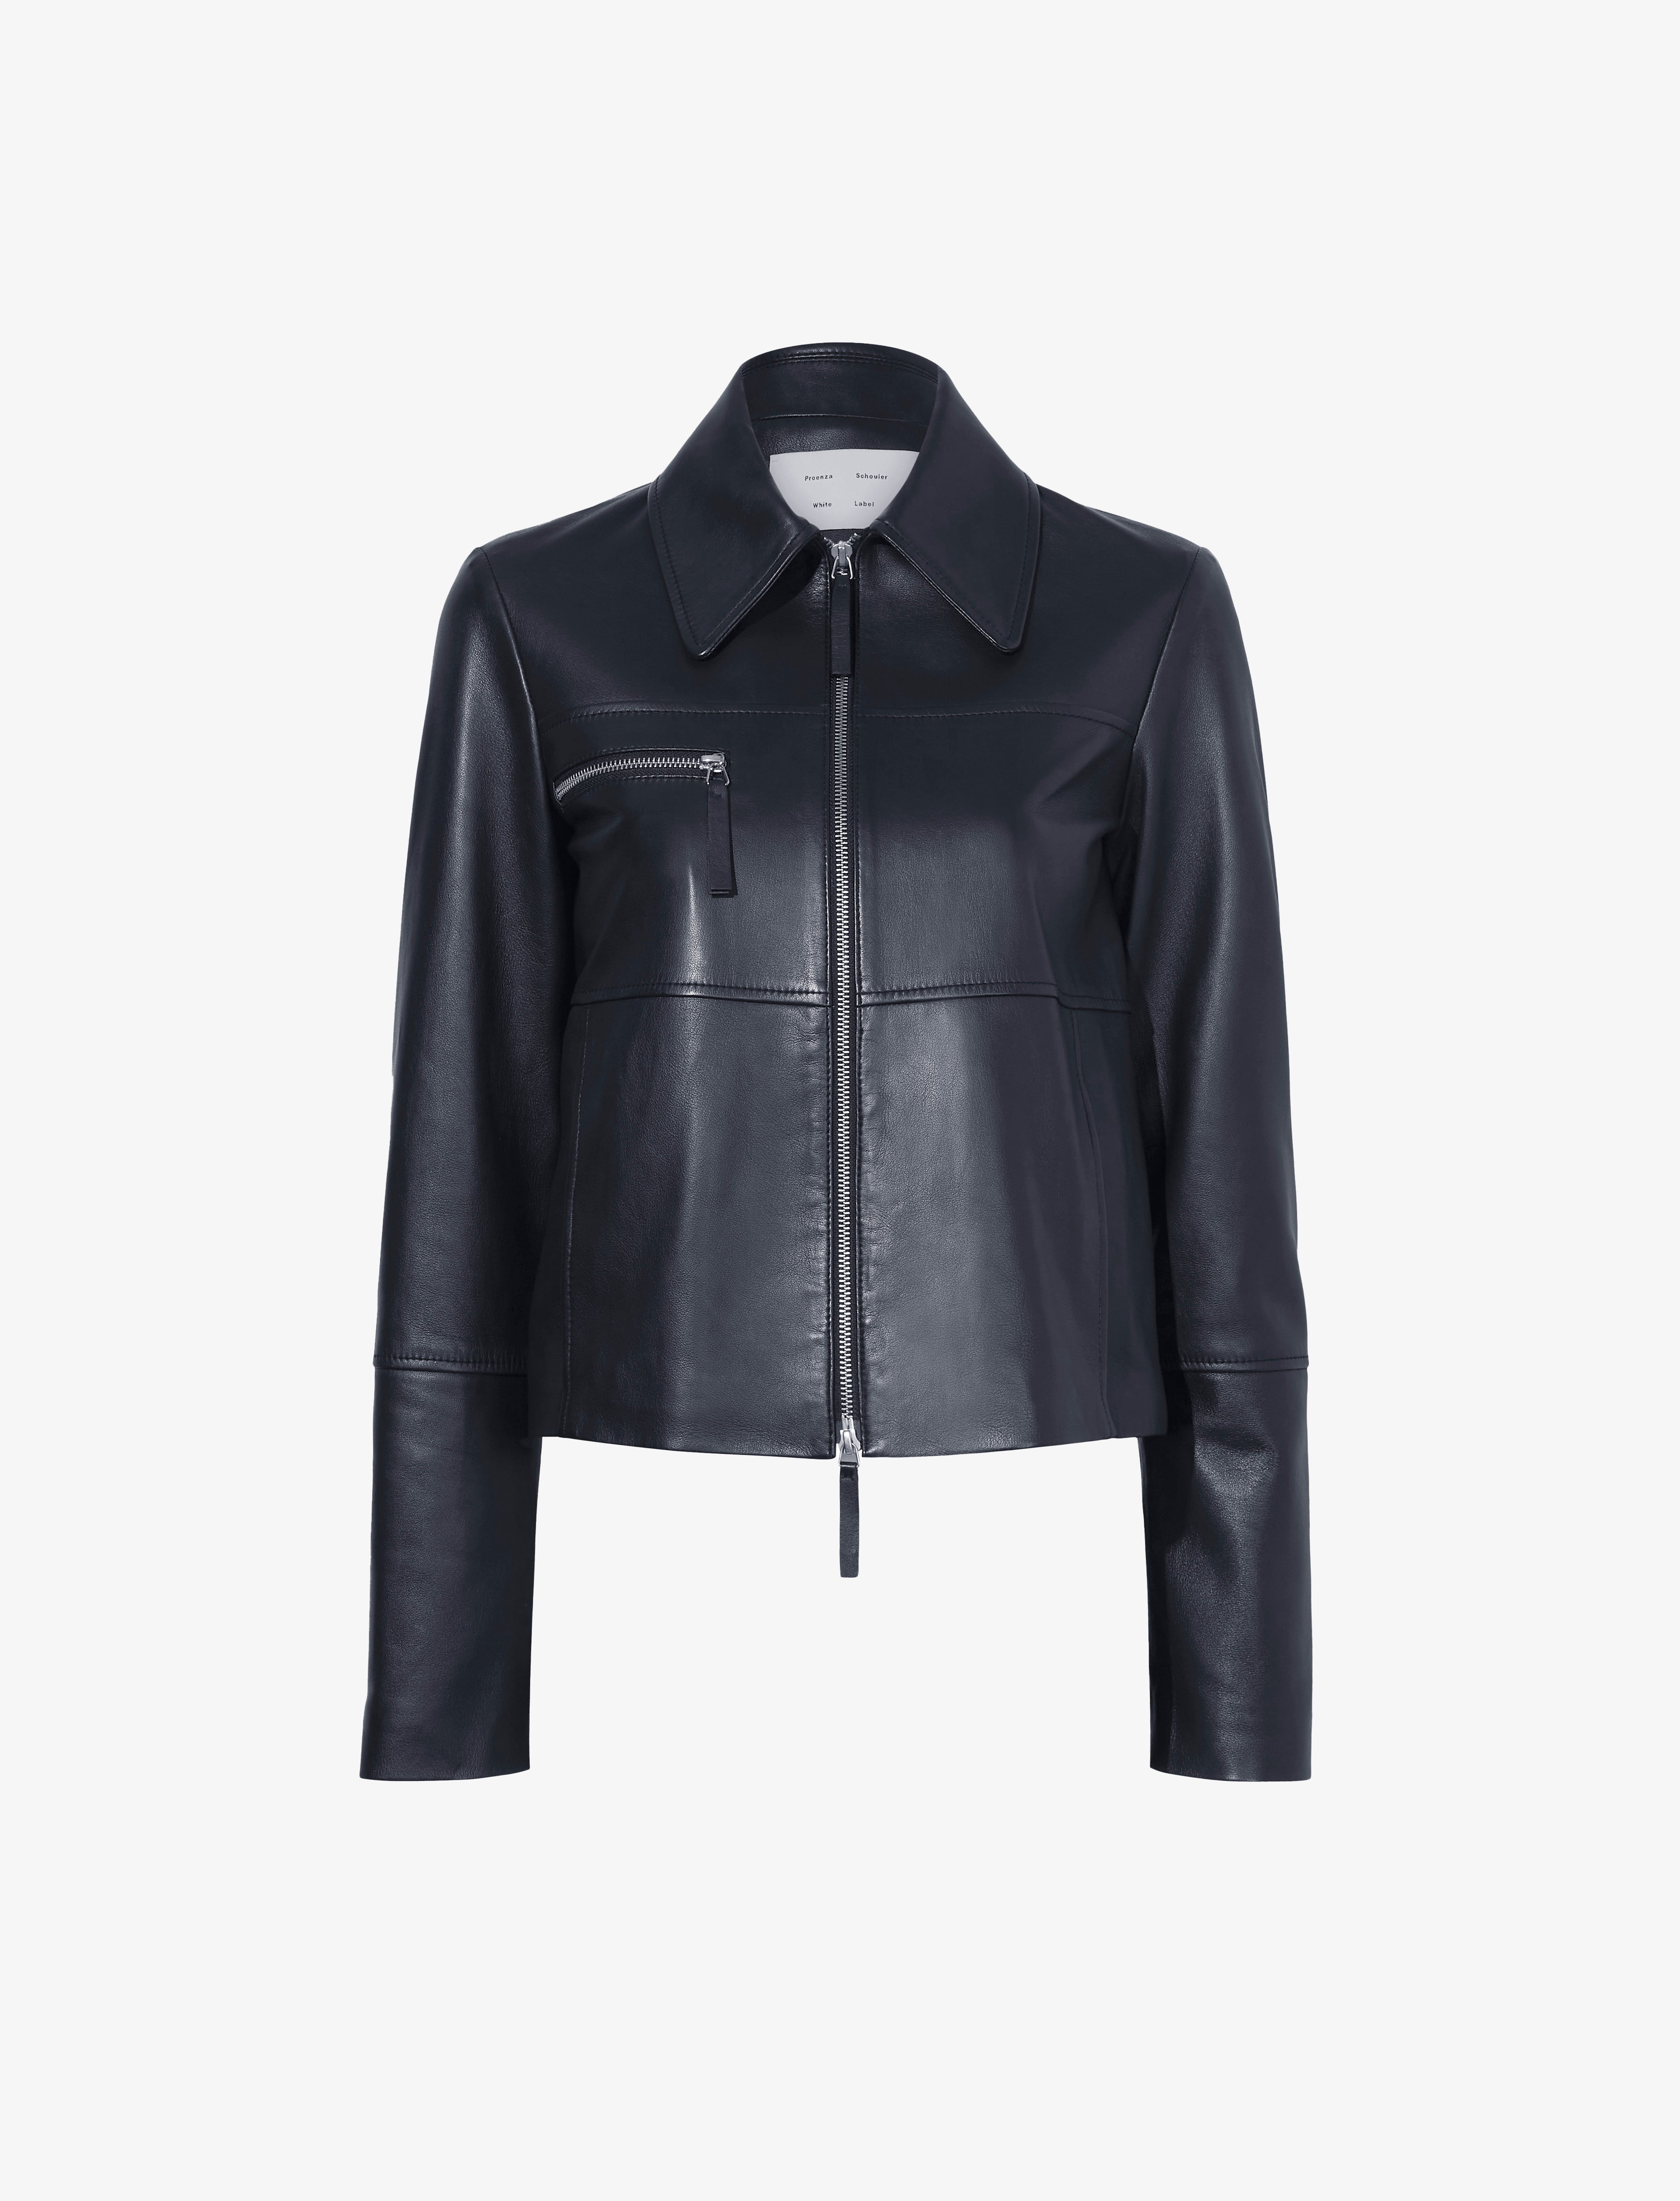 Colorichiari faux-leather jacket - White